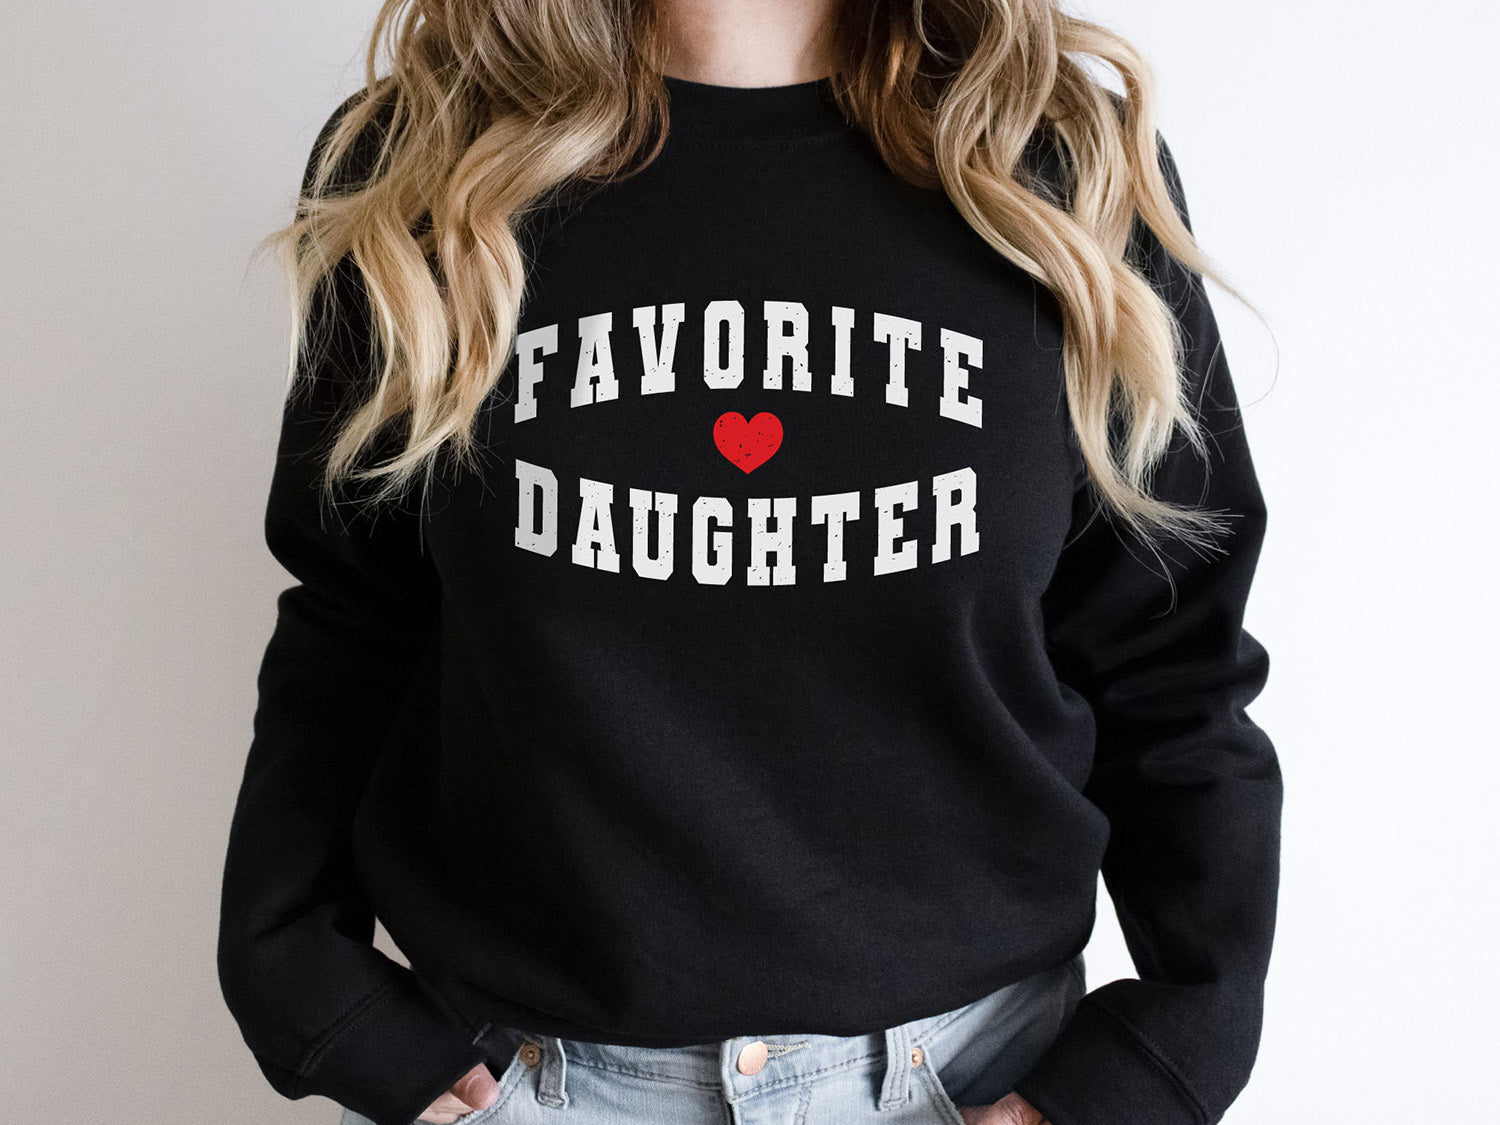 Favorite Daughter Heart Sweatshirt - Funny Daughter Design Printed Sweatshirt